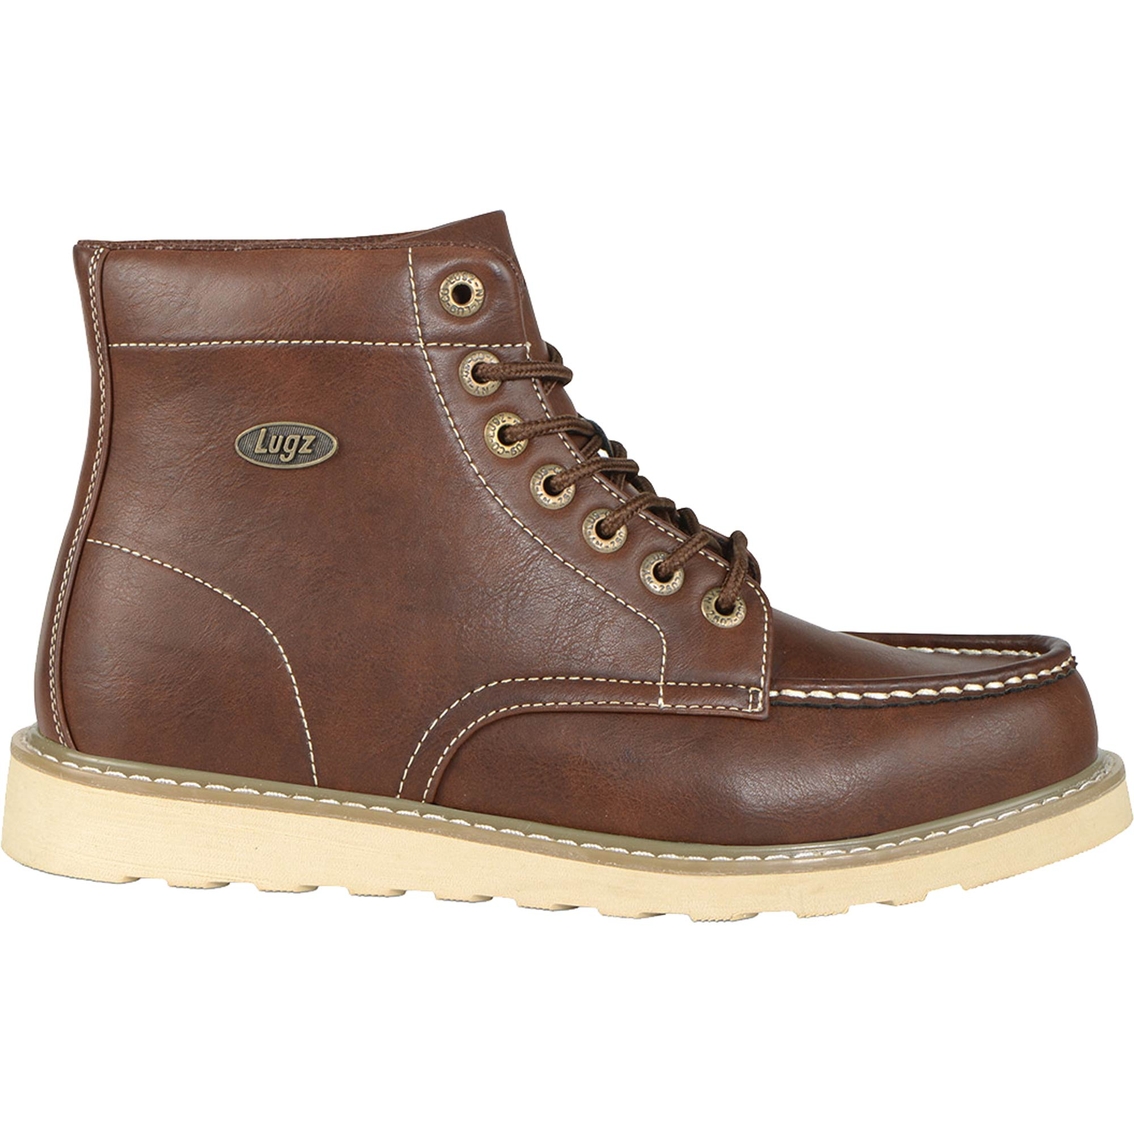 Lugz Roamer Hi Boots | Work & Outdoor | Shoes | Shop The Exchange